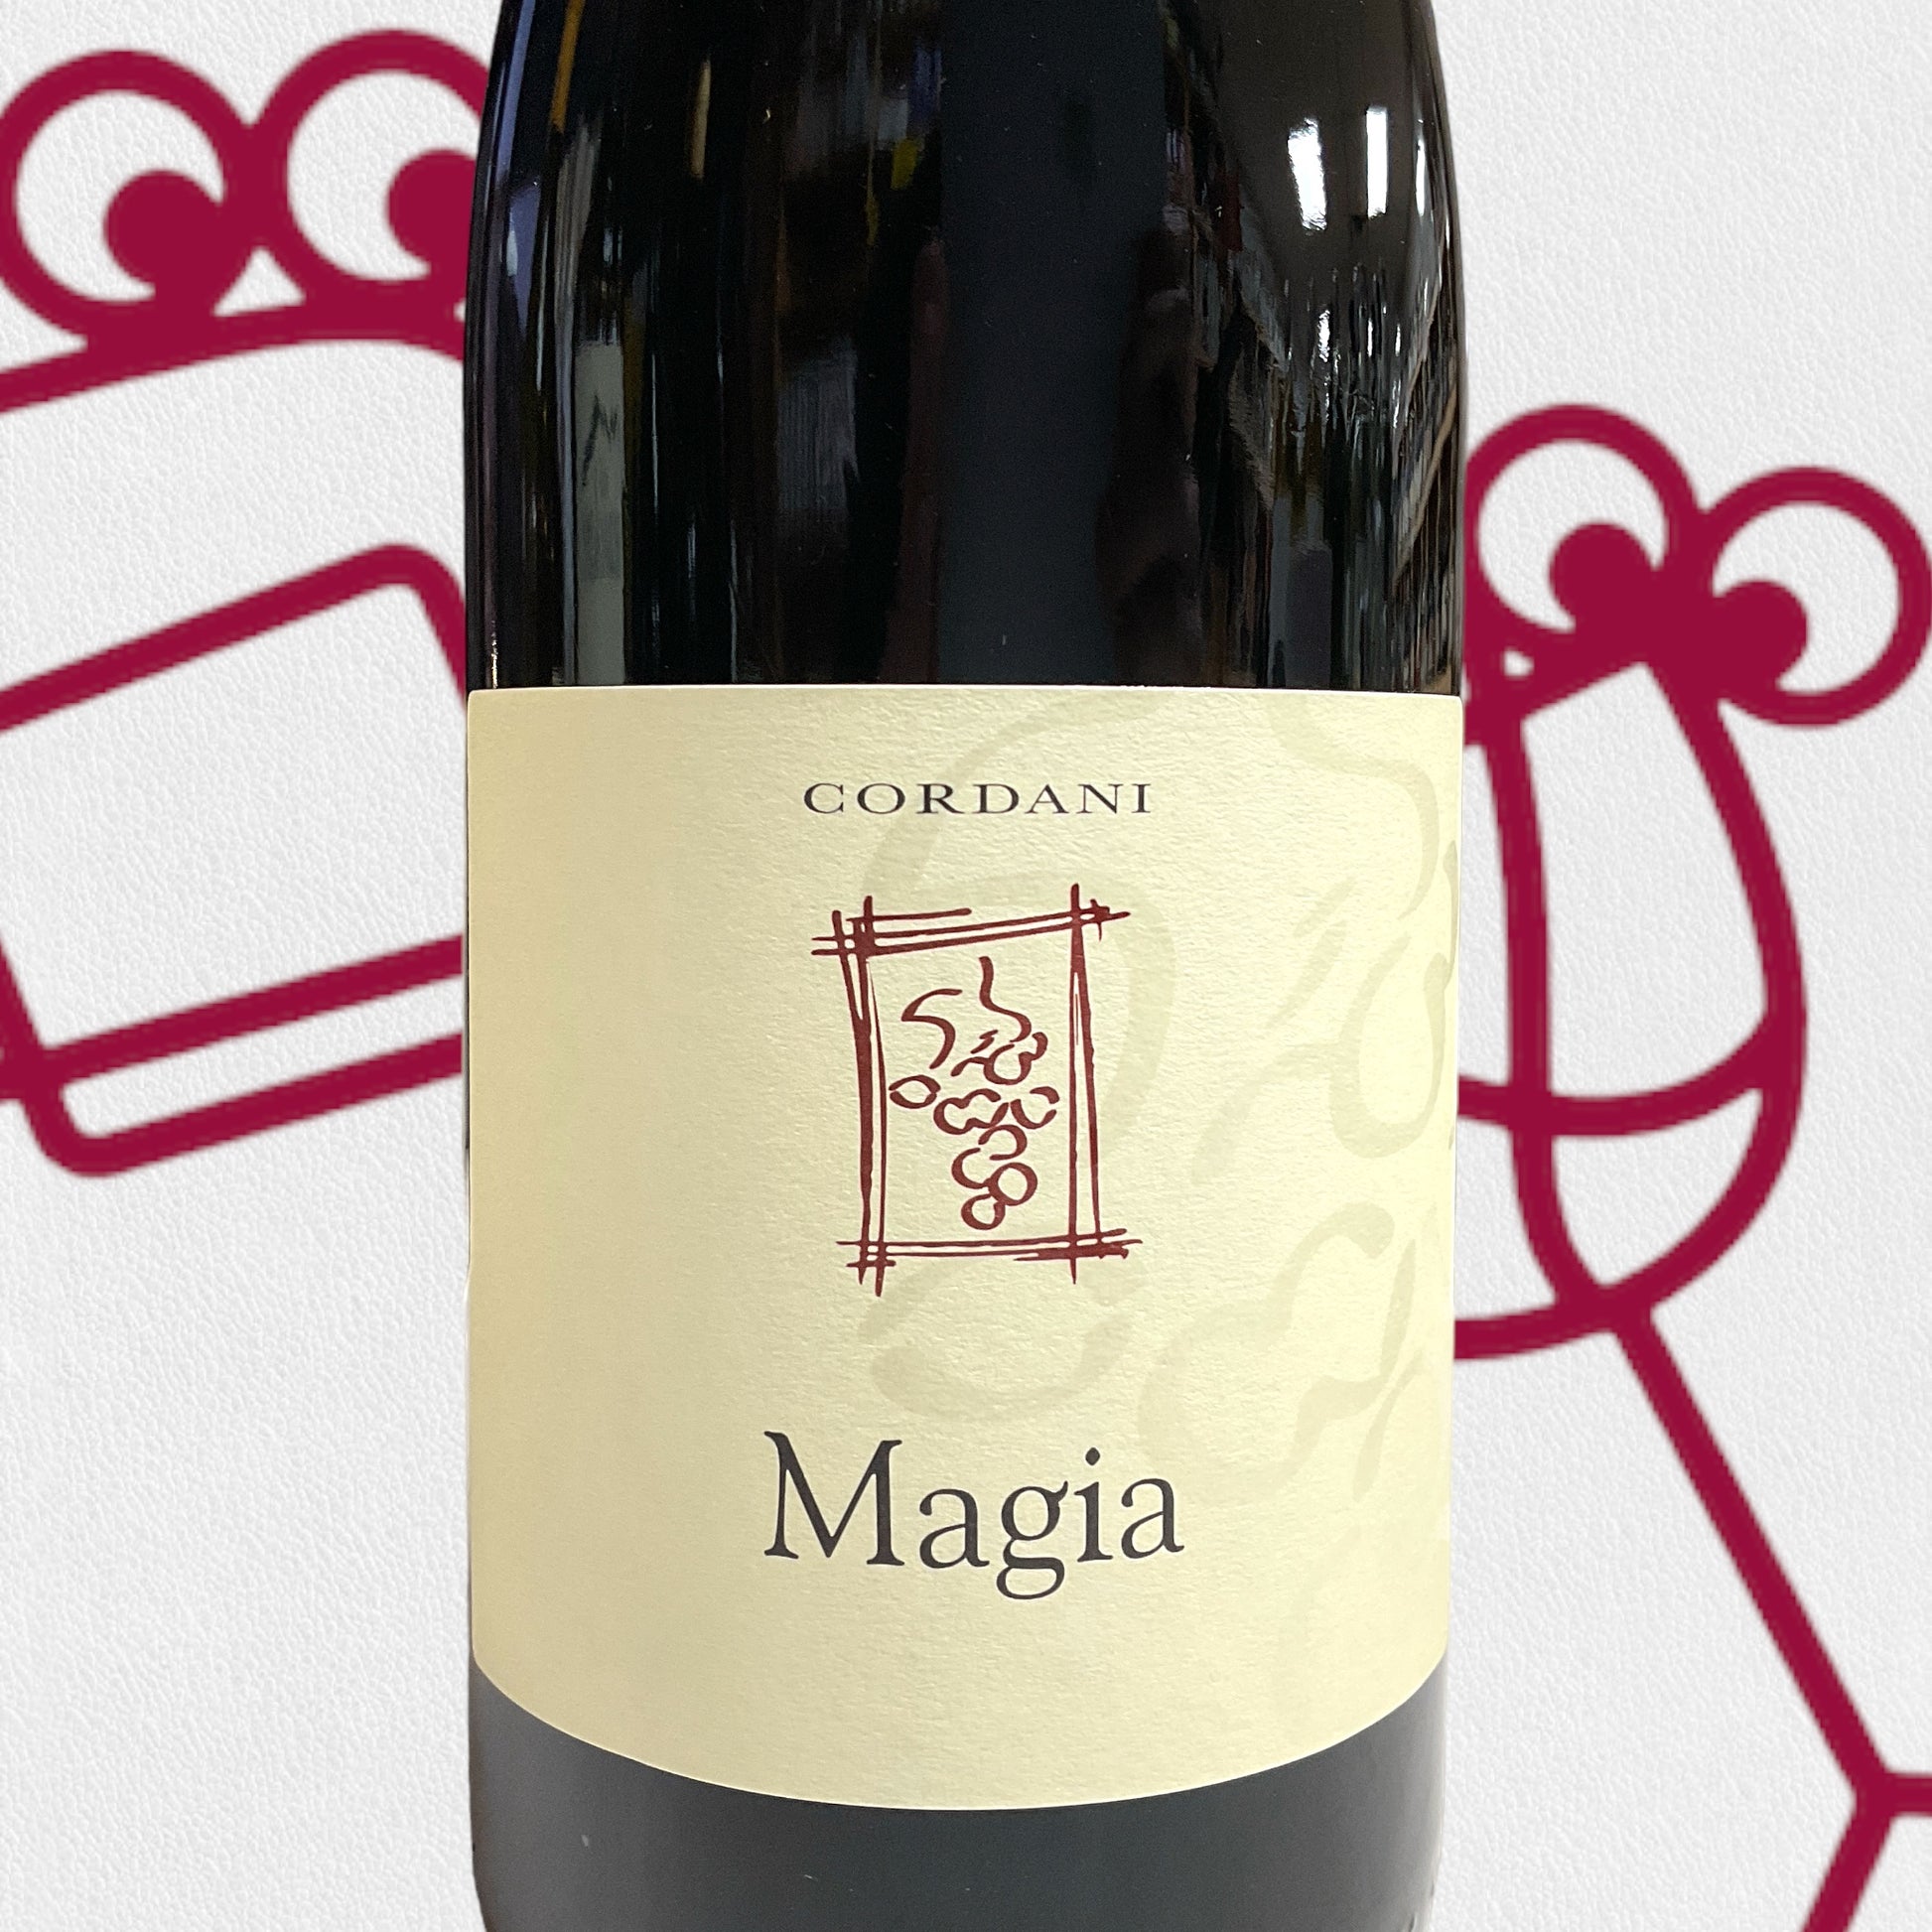 Cordani 'Magia' 2020 Emilia-Romagna, Italy - Williston Park Wines & Spirits